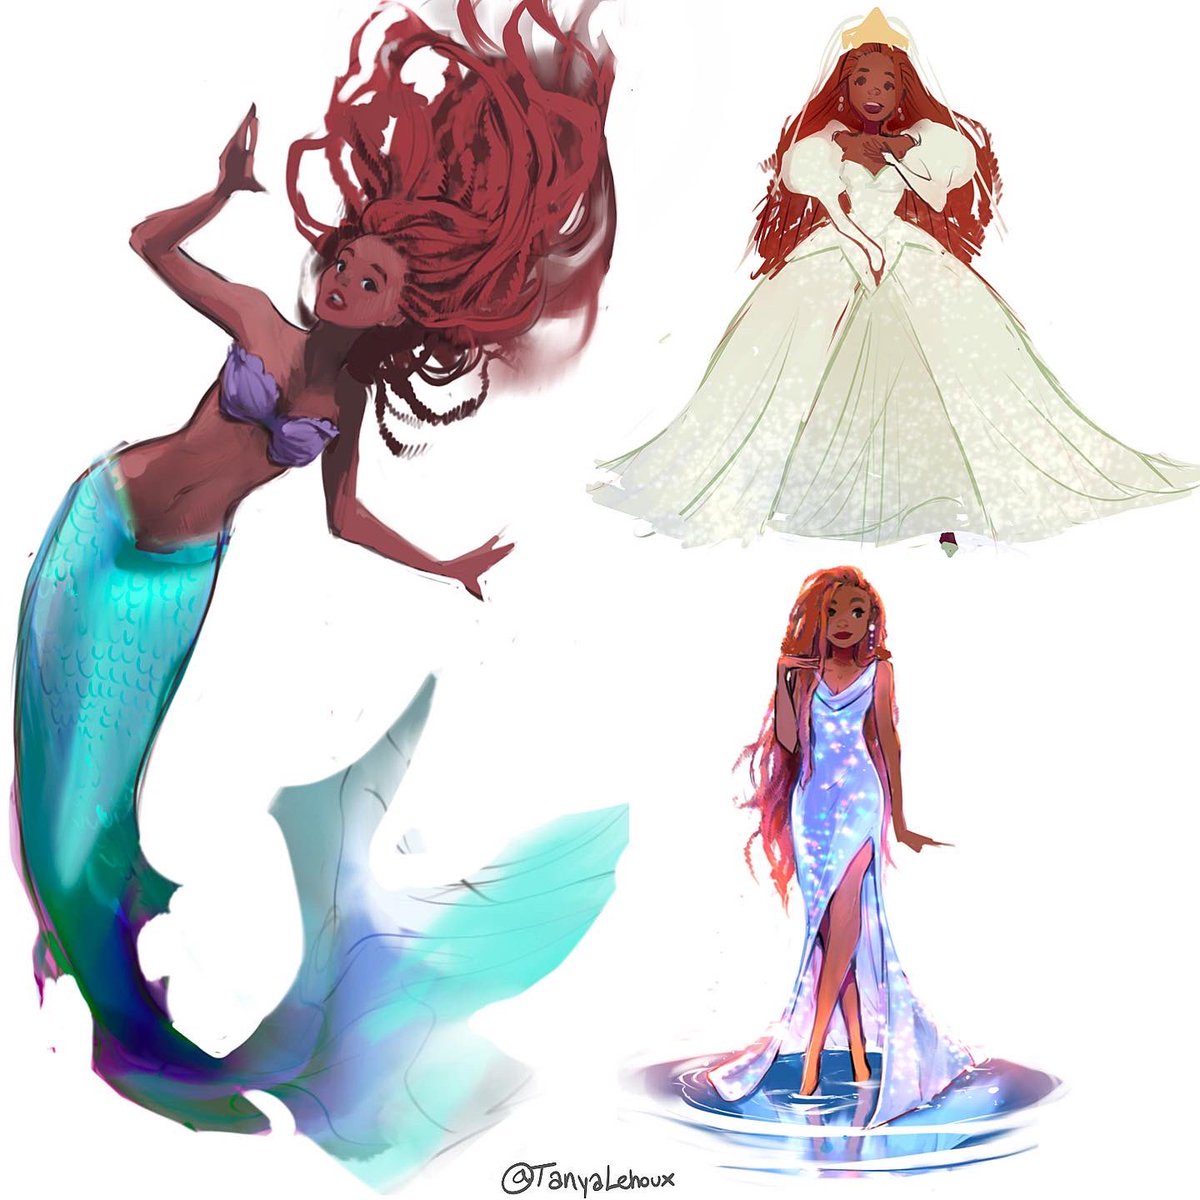 happy The Little Mermaid day! #Ariel #disney #THELITTLEMERMAID #HalleBailey